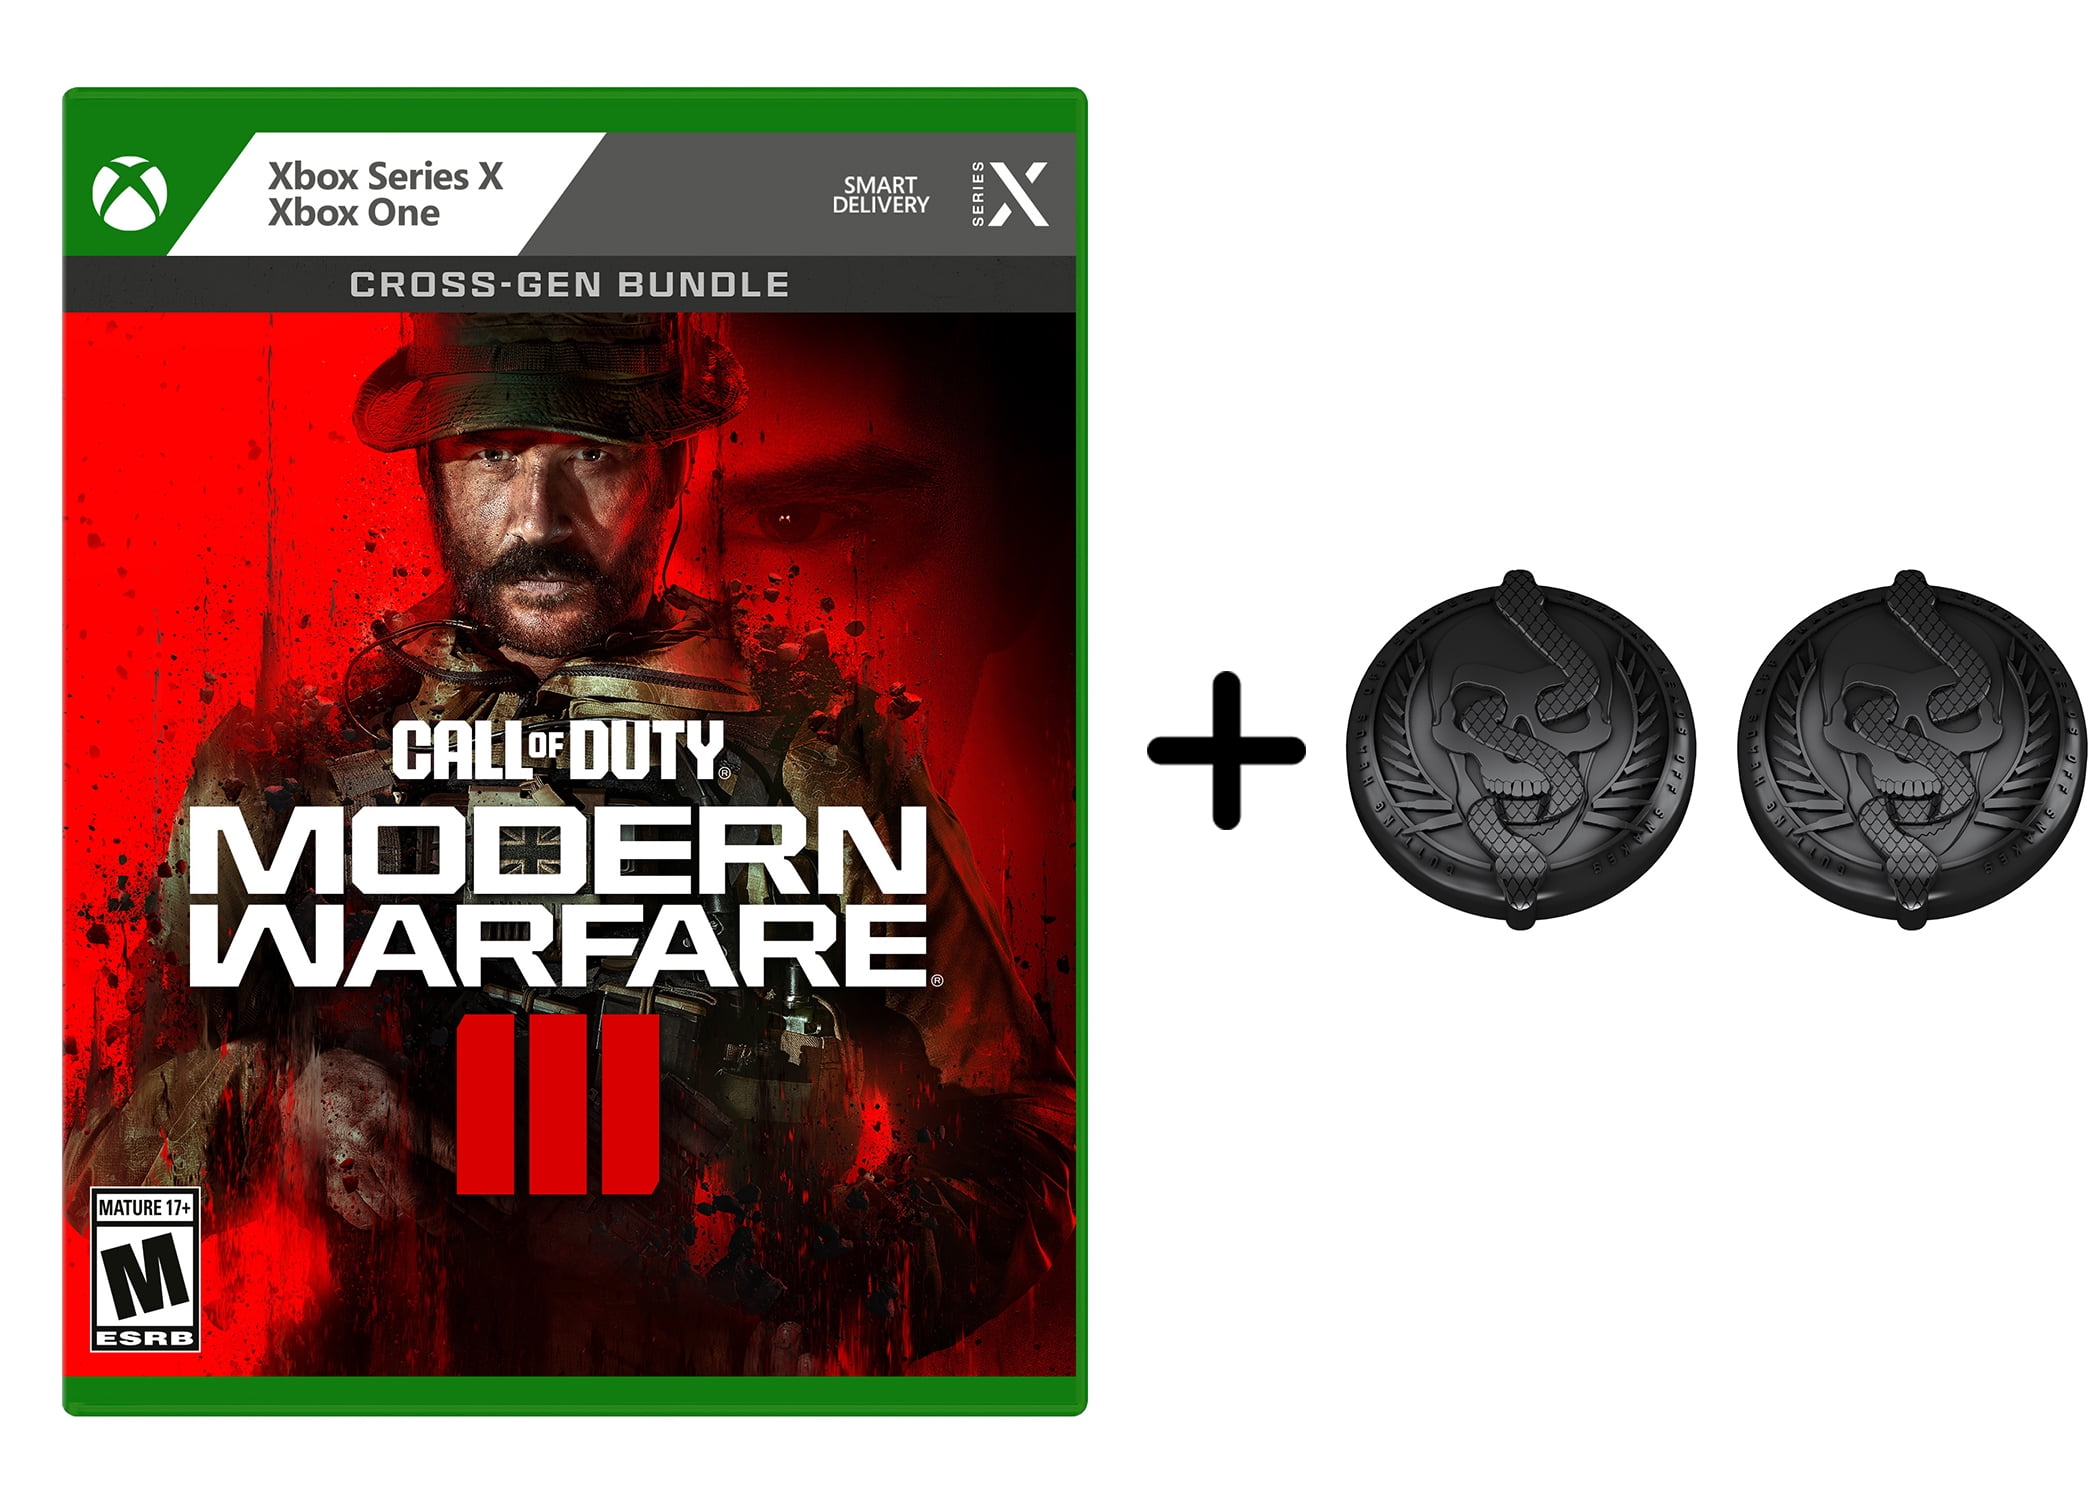 Call of Duty: Modern Warfare III - Cross-Gen Bundle with Exclusive  KontrolFreek Thumb Grips - Xbox Series X